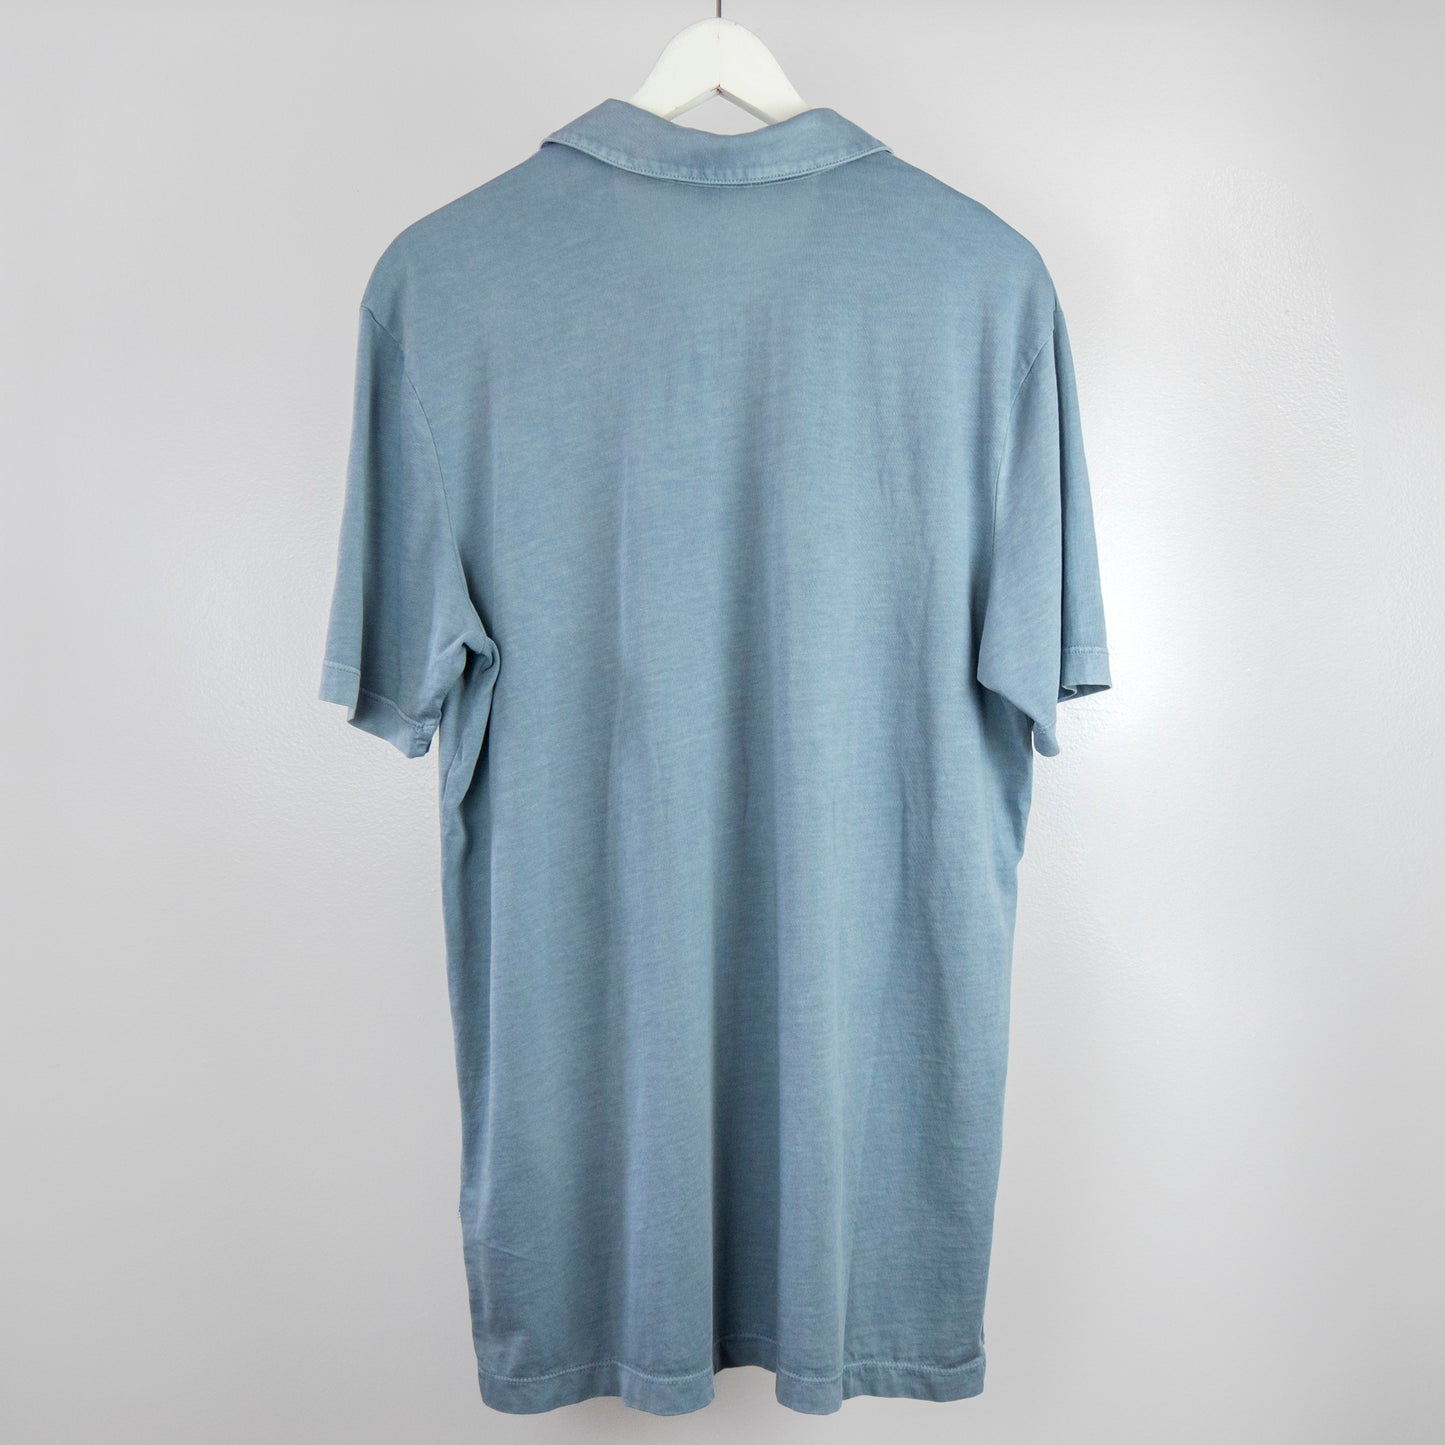 James Perse - Classic Linen Shirt - Bluestone Pigment